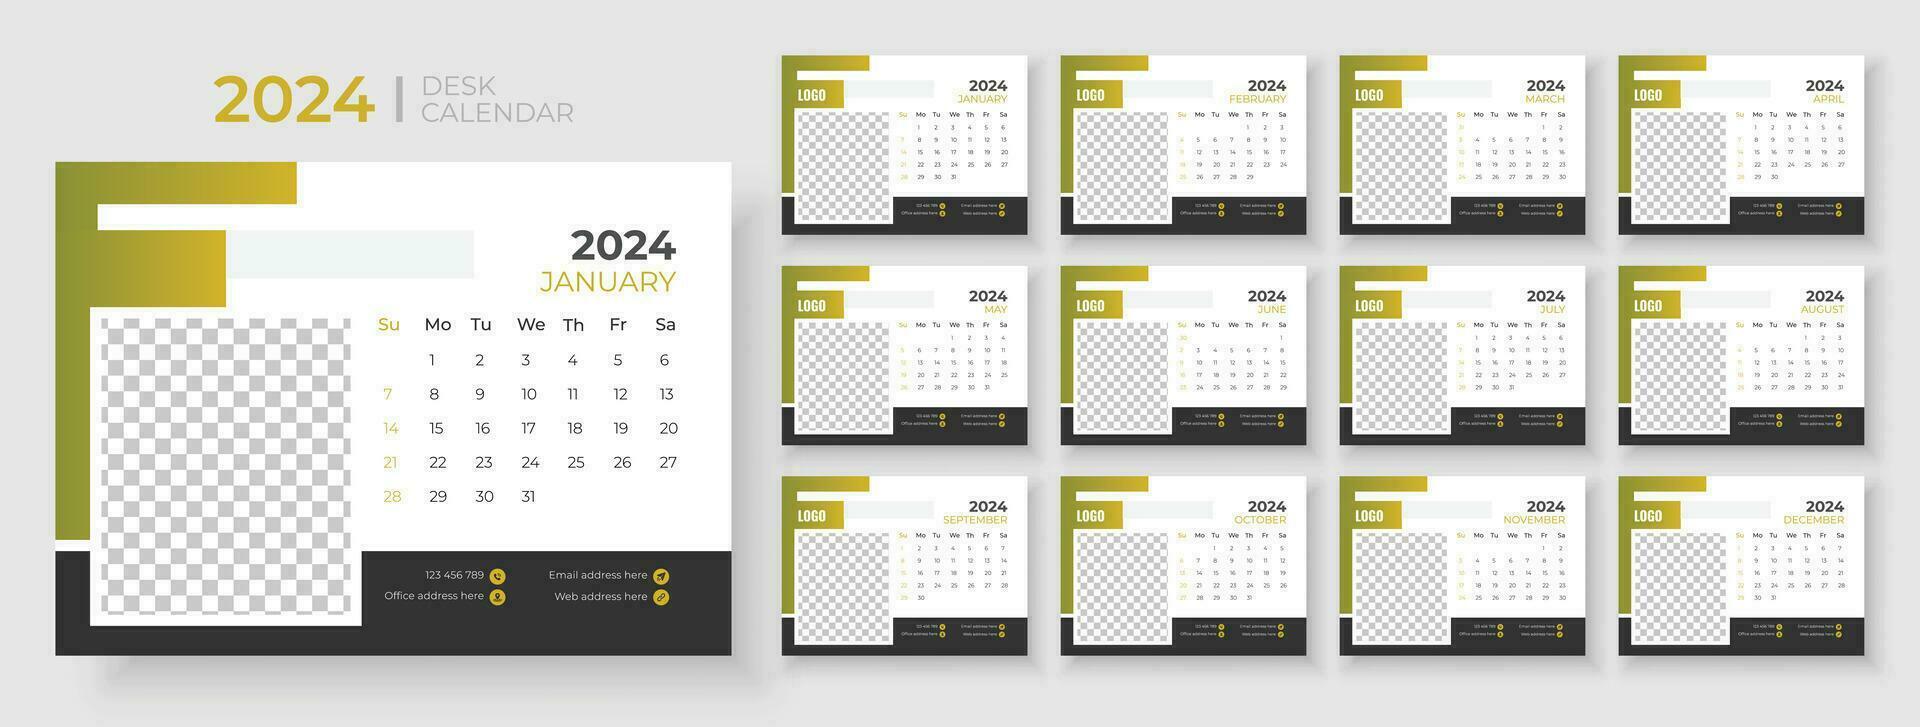 Desk calendar template 2024, Week Starts on sunday, Planner for 2024 year, template for annual calendar 2024 vector